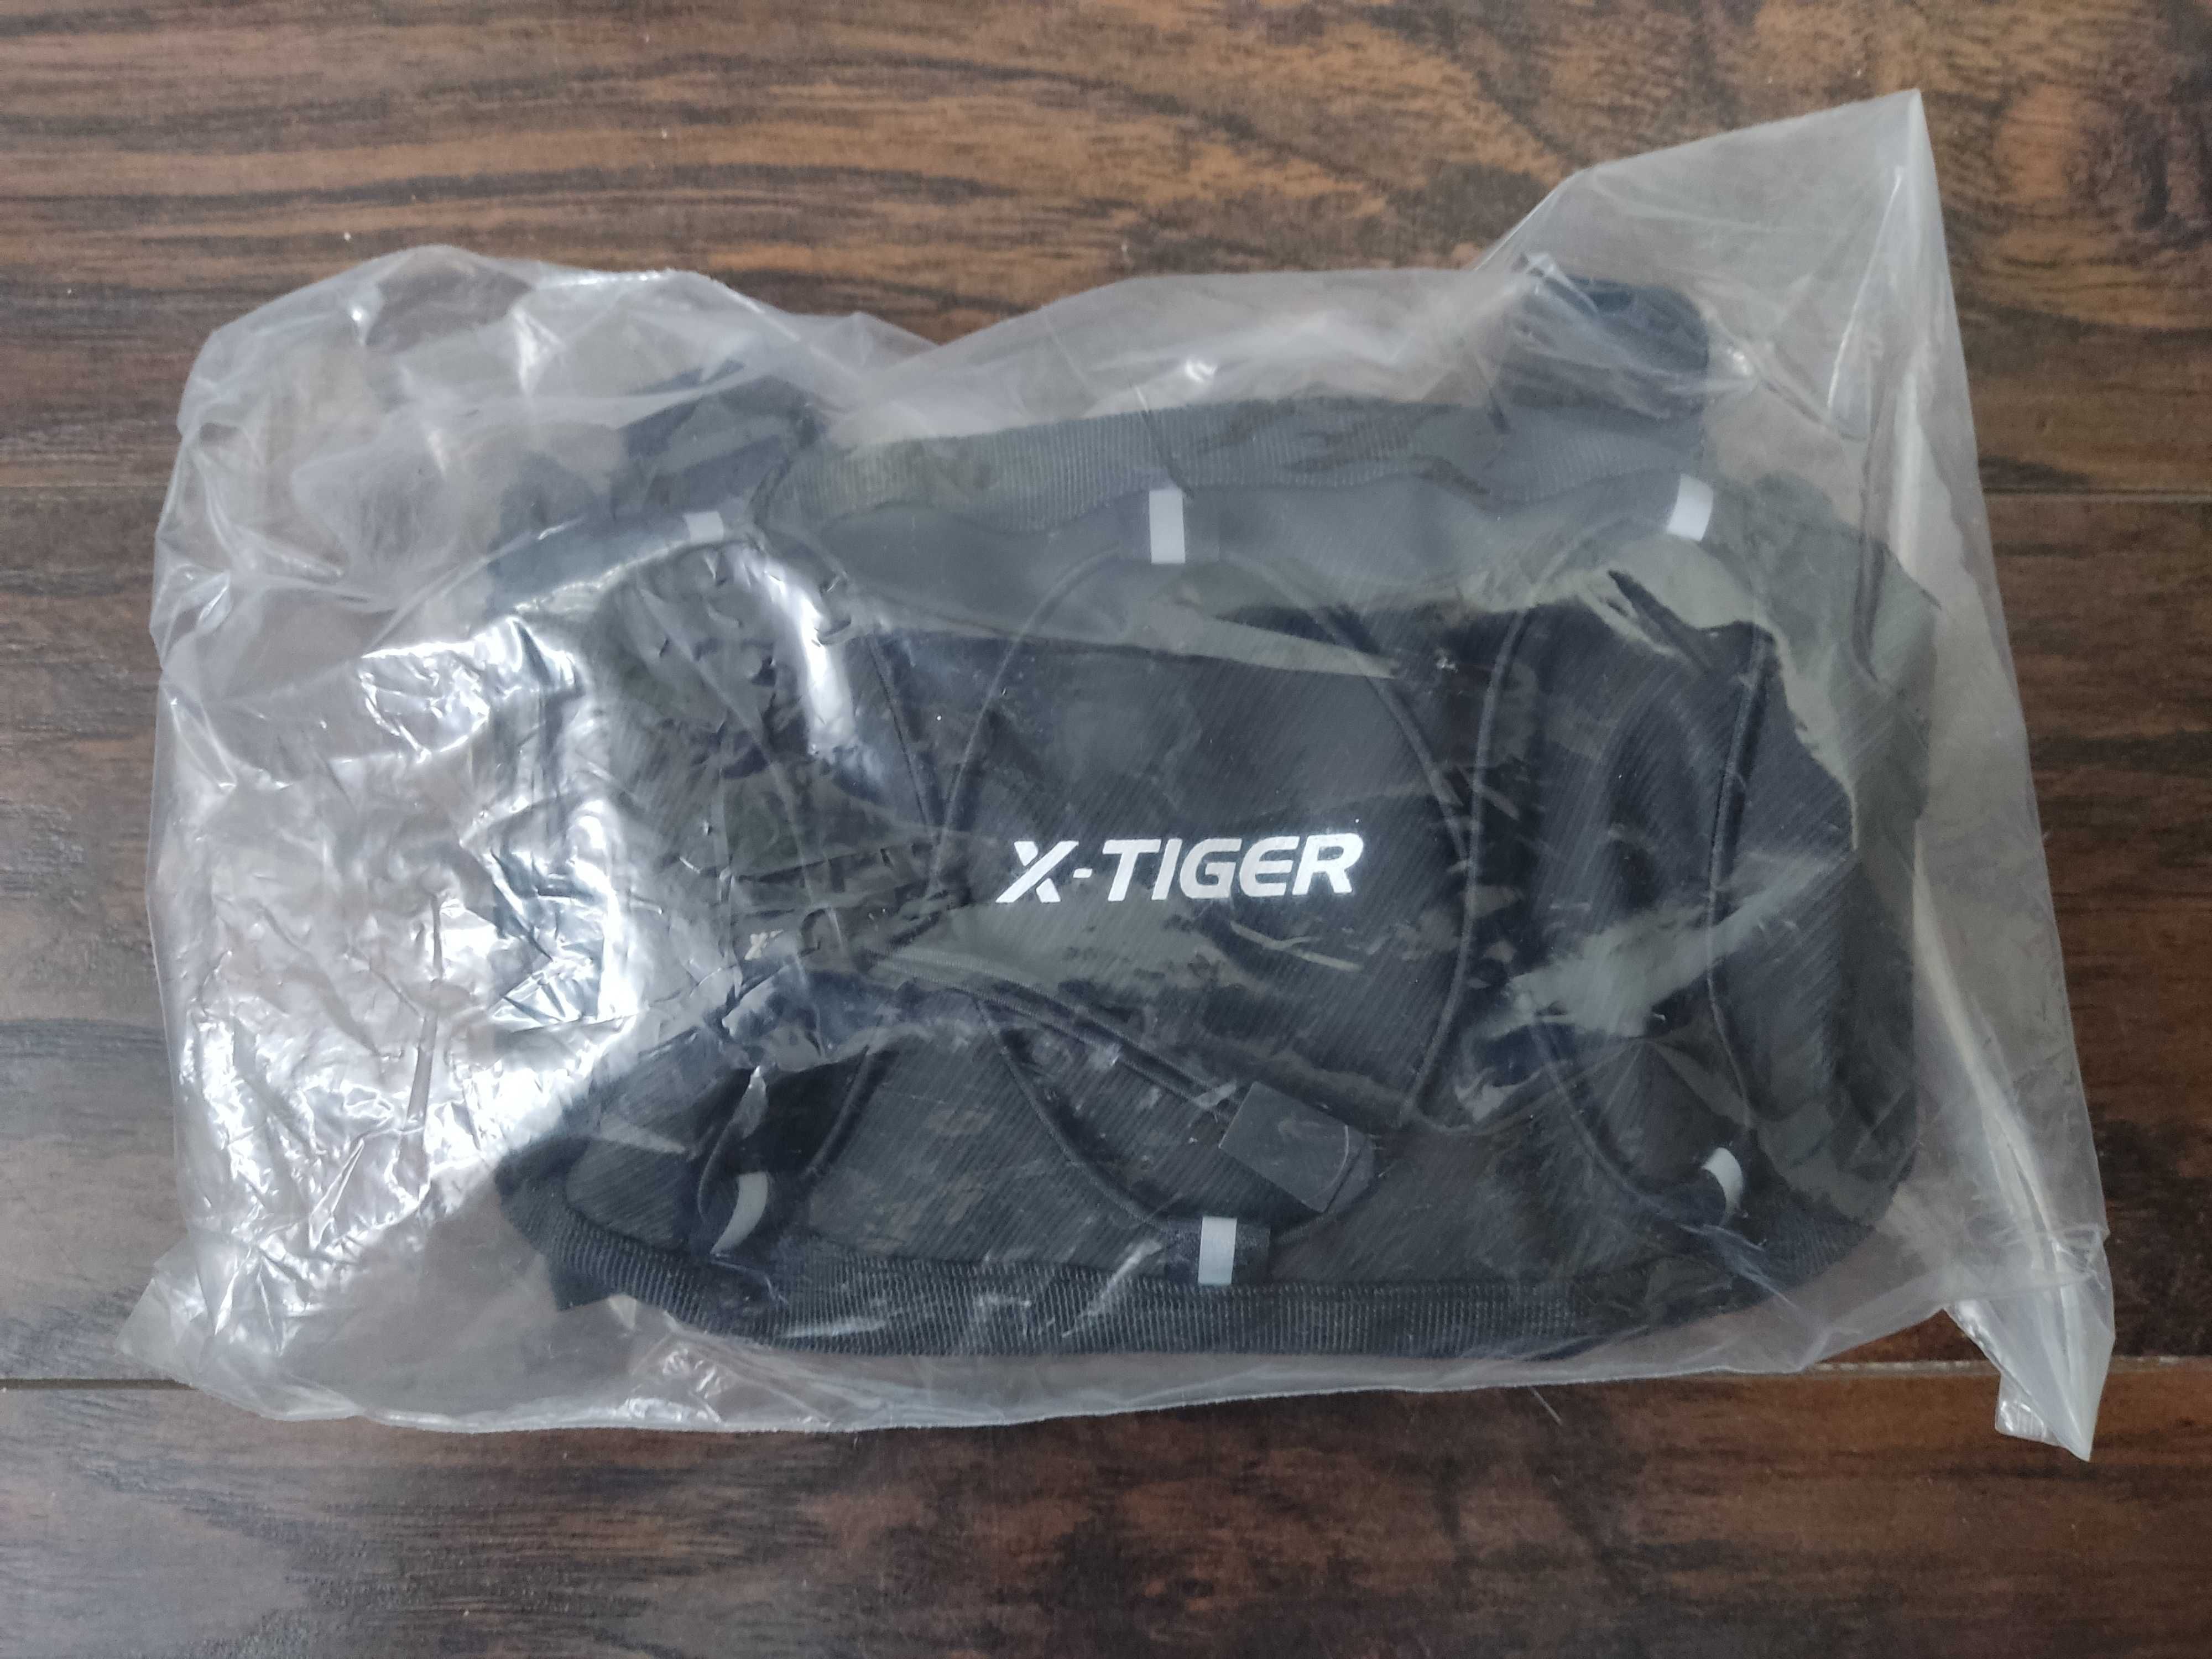 X-Tiger torba rowerowa